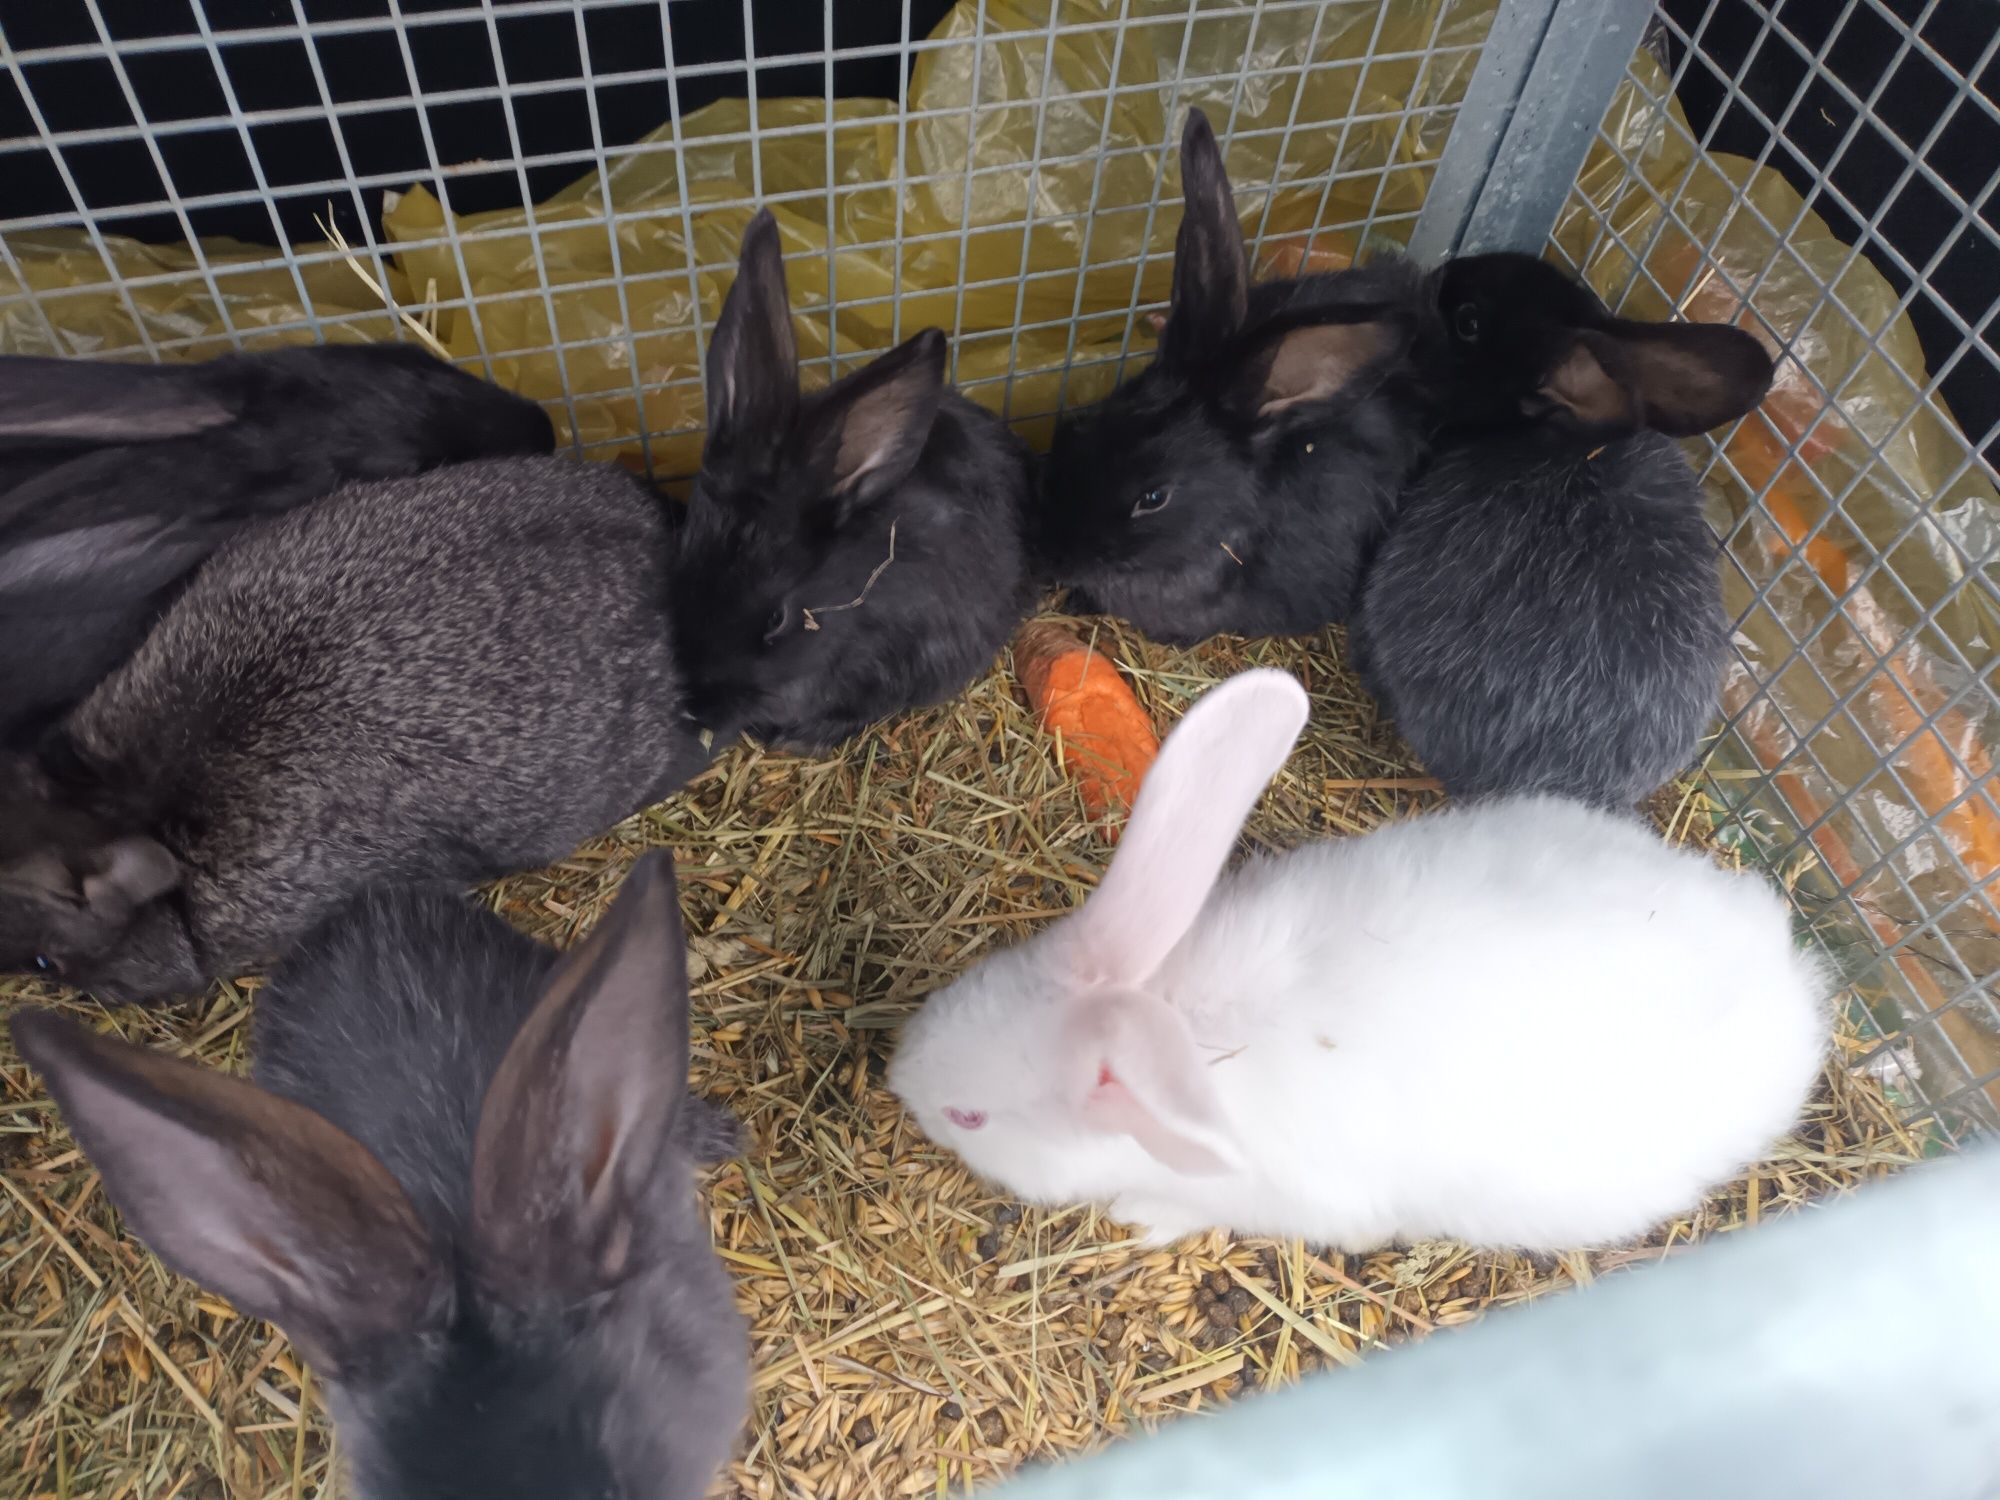 Szprzedam 9 króliki belgi